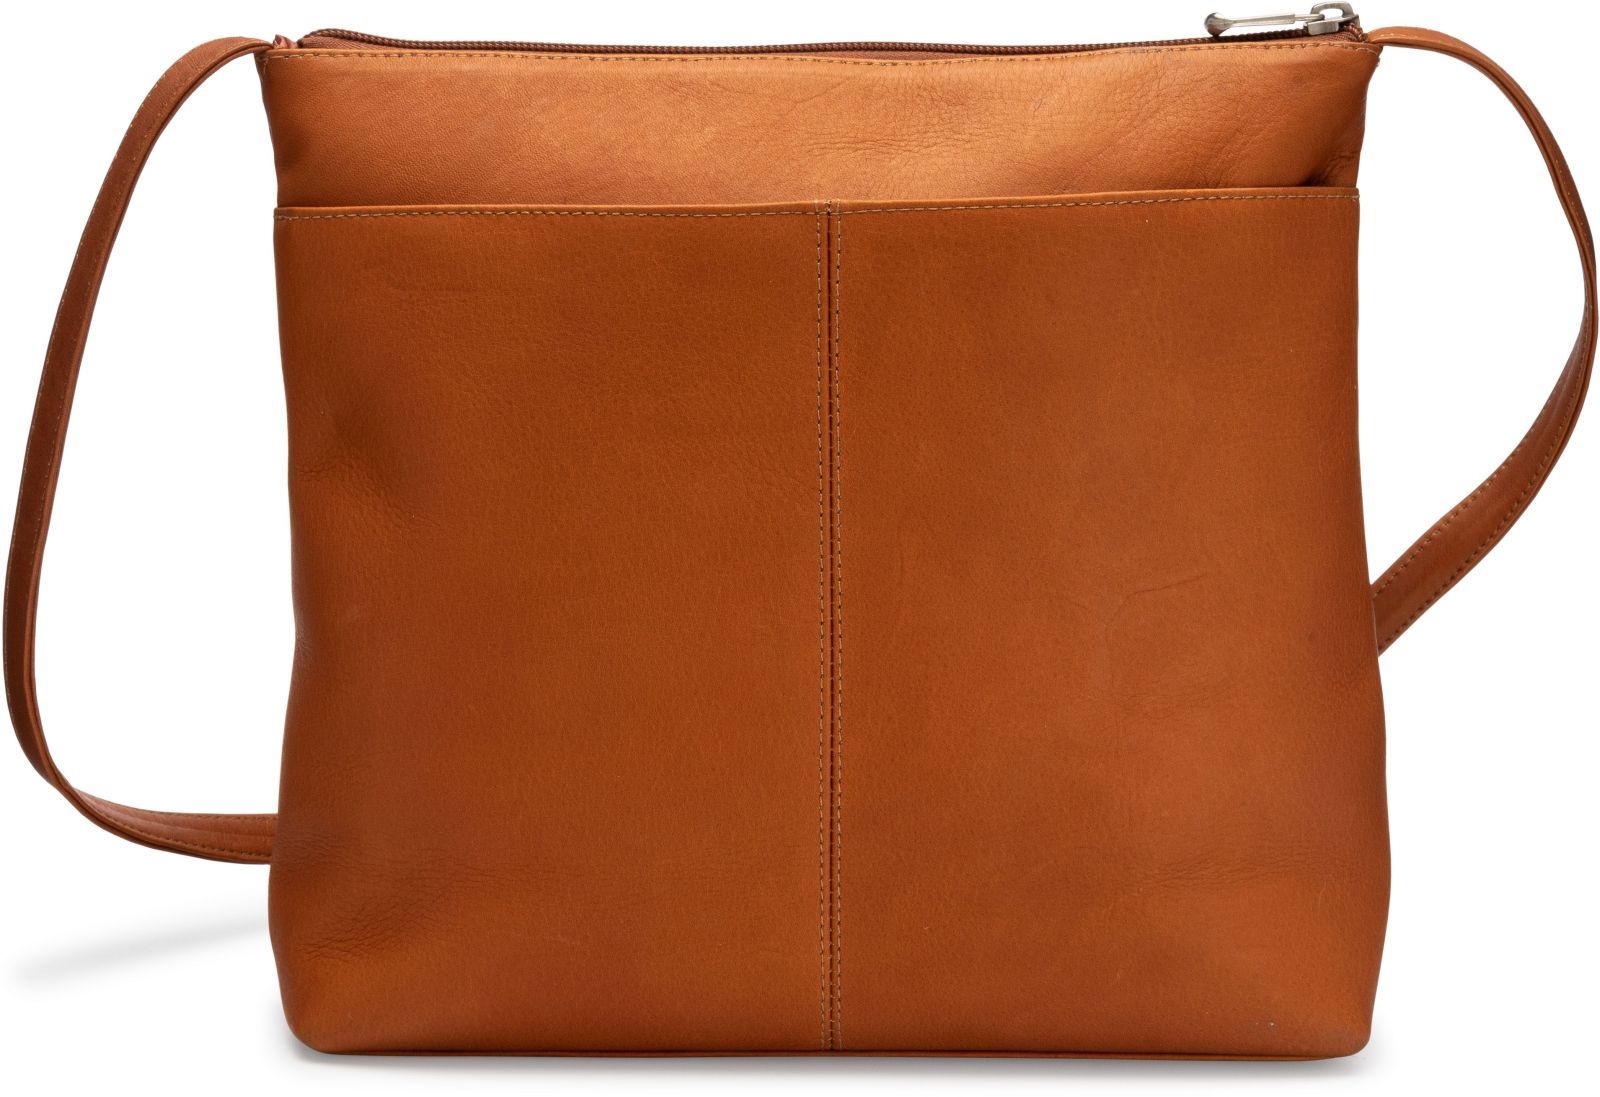 Le Donne Leather Glorienda Multi Bag LD-9966 - image 3 of 4